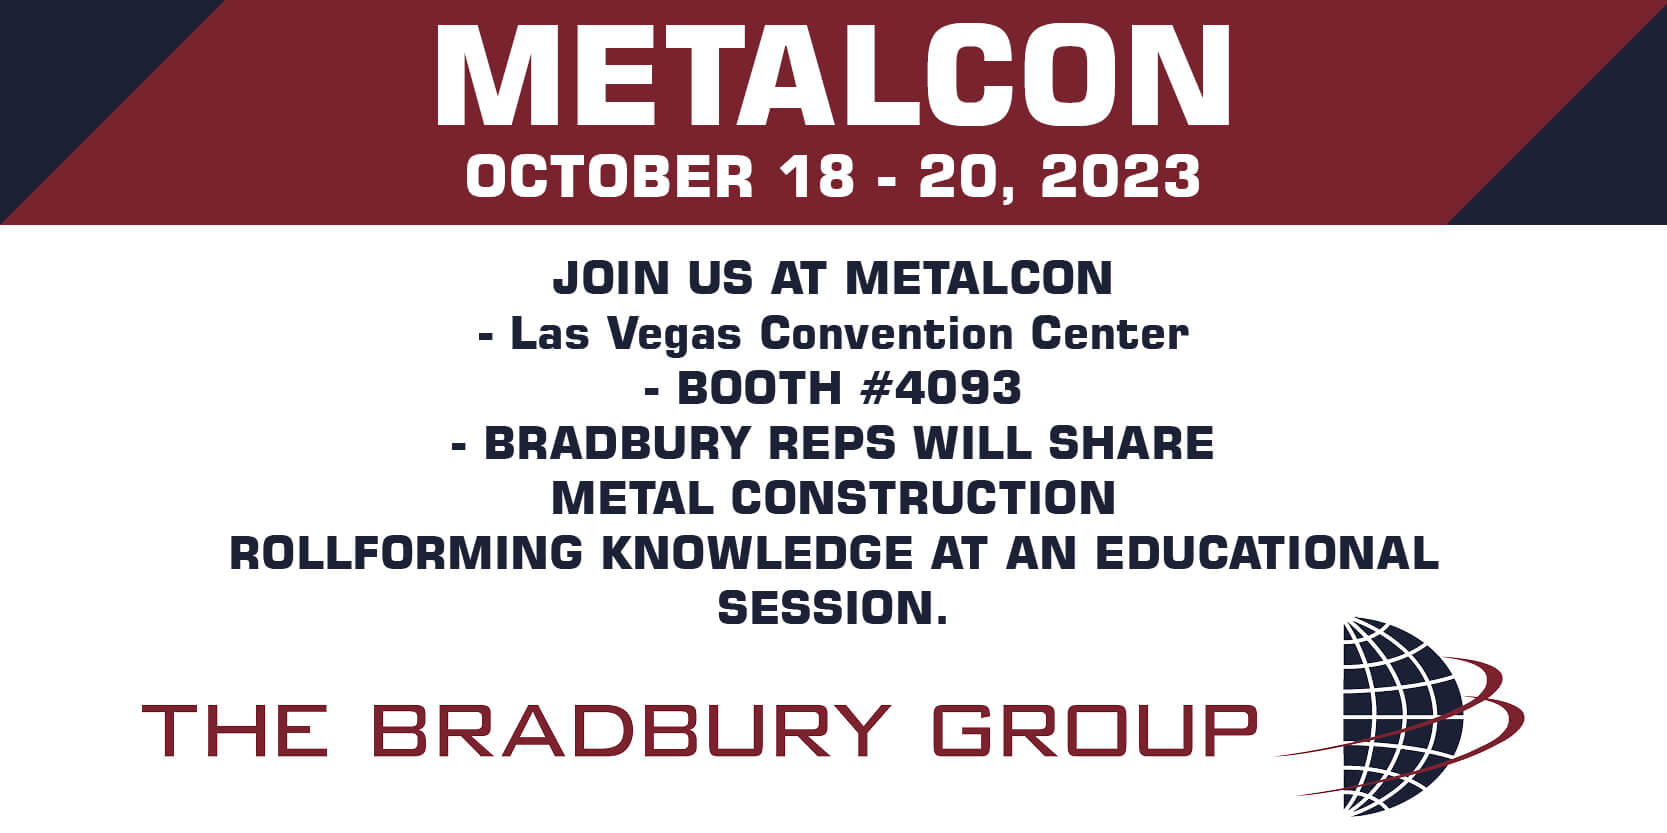 Bradbury Group Professionals to Present at Metalcon 2023